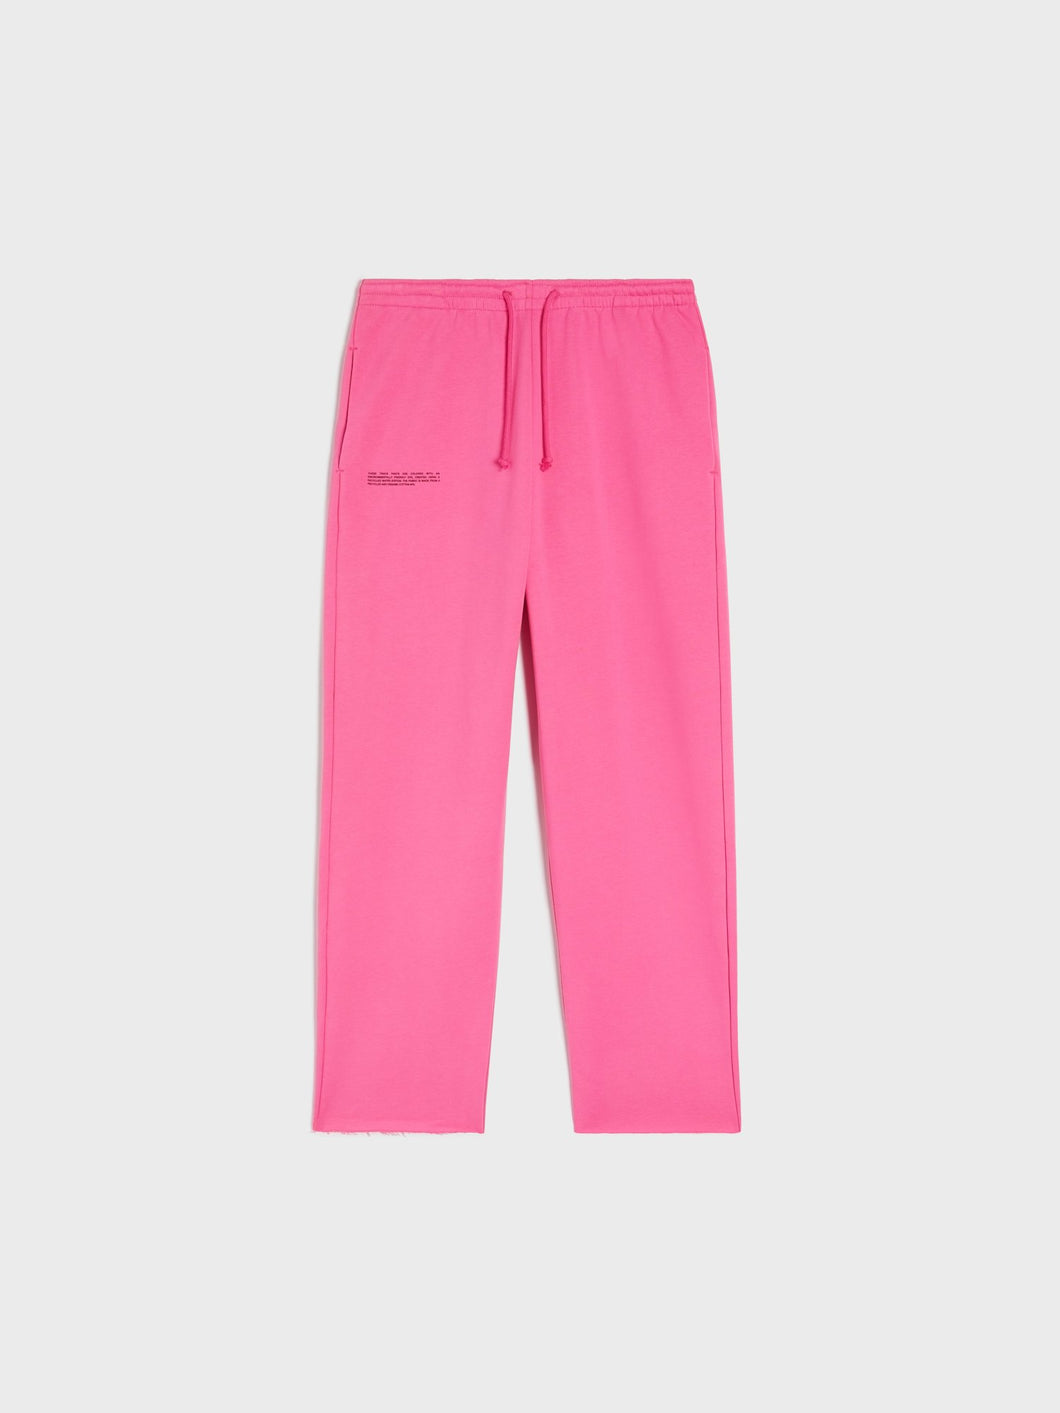 Flamingo Pink Loose Pants